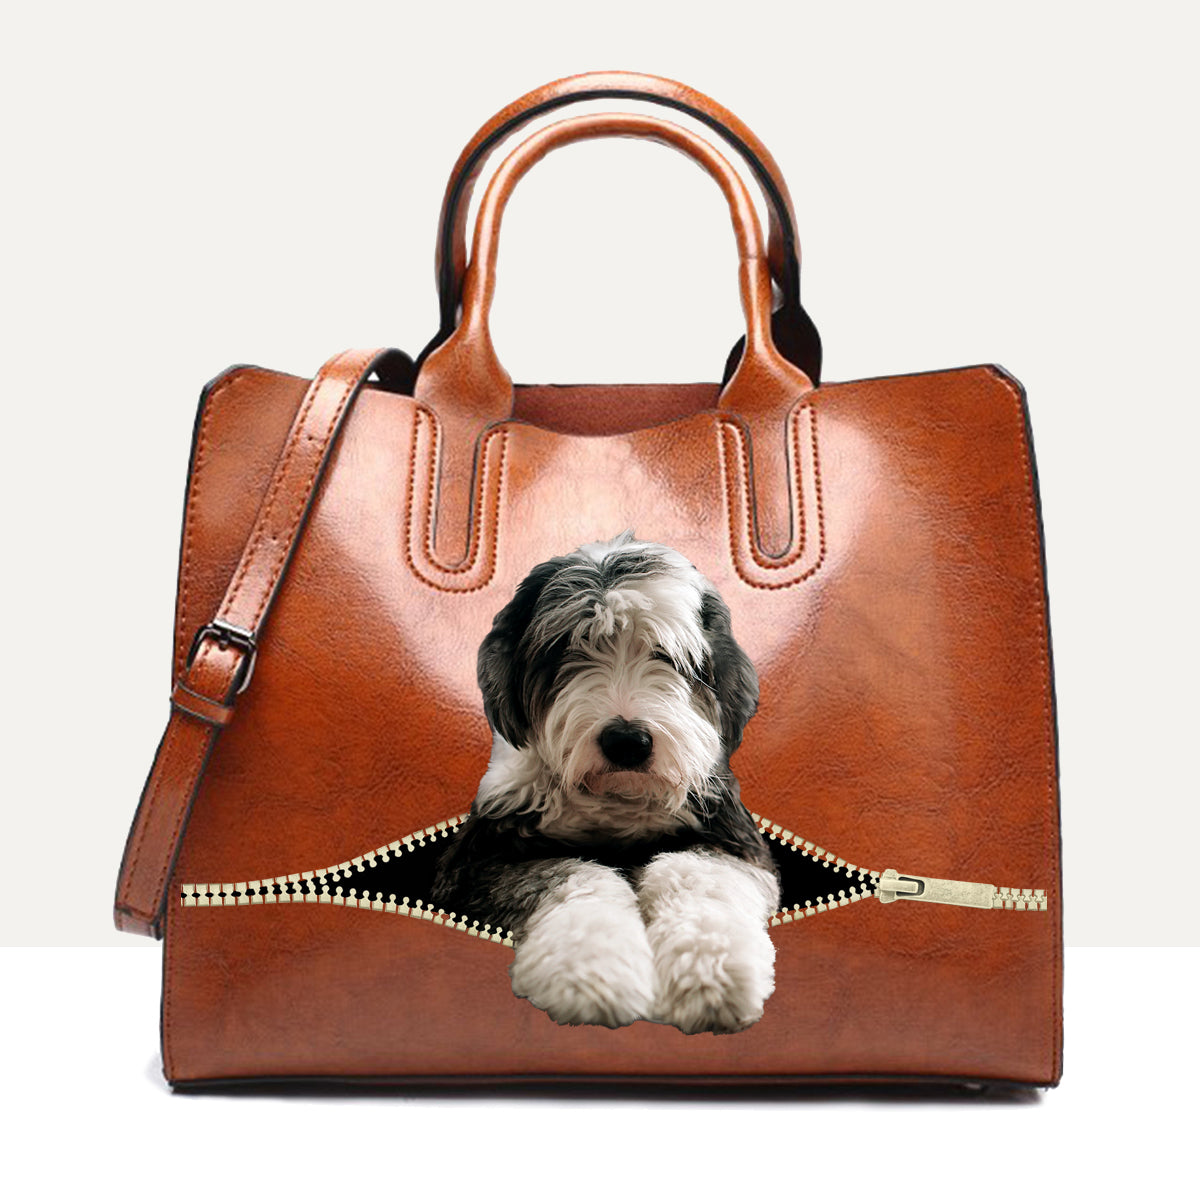 Your Best Companion - Old English Sheepdog Luxury Handbag V1